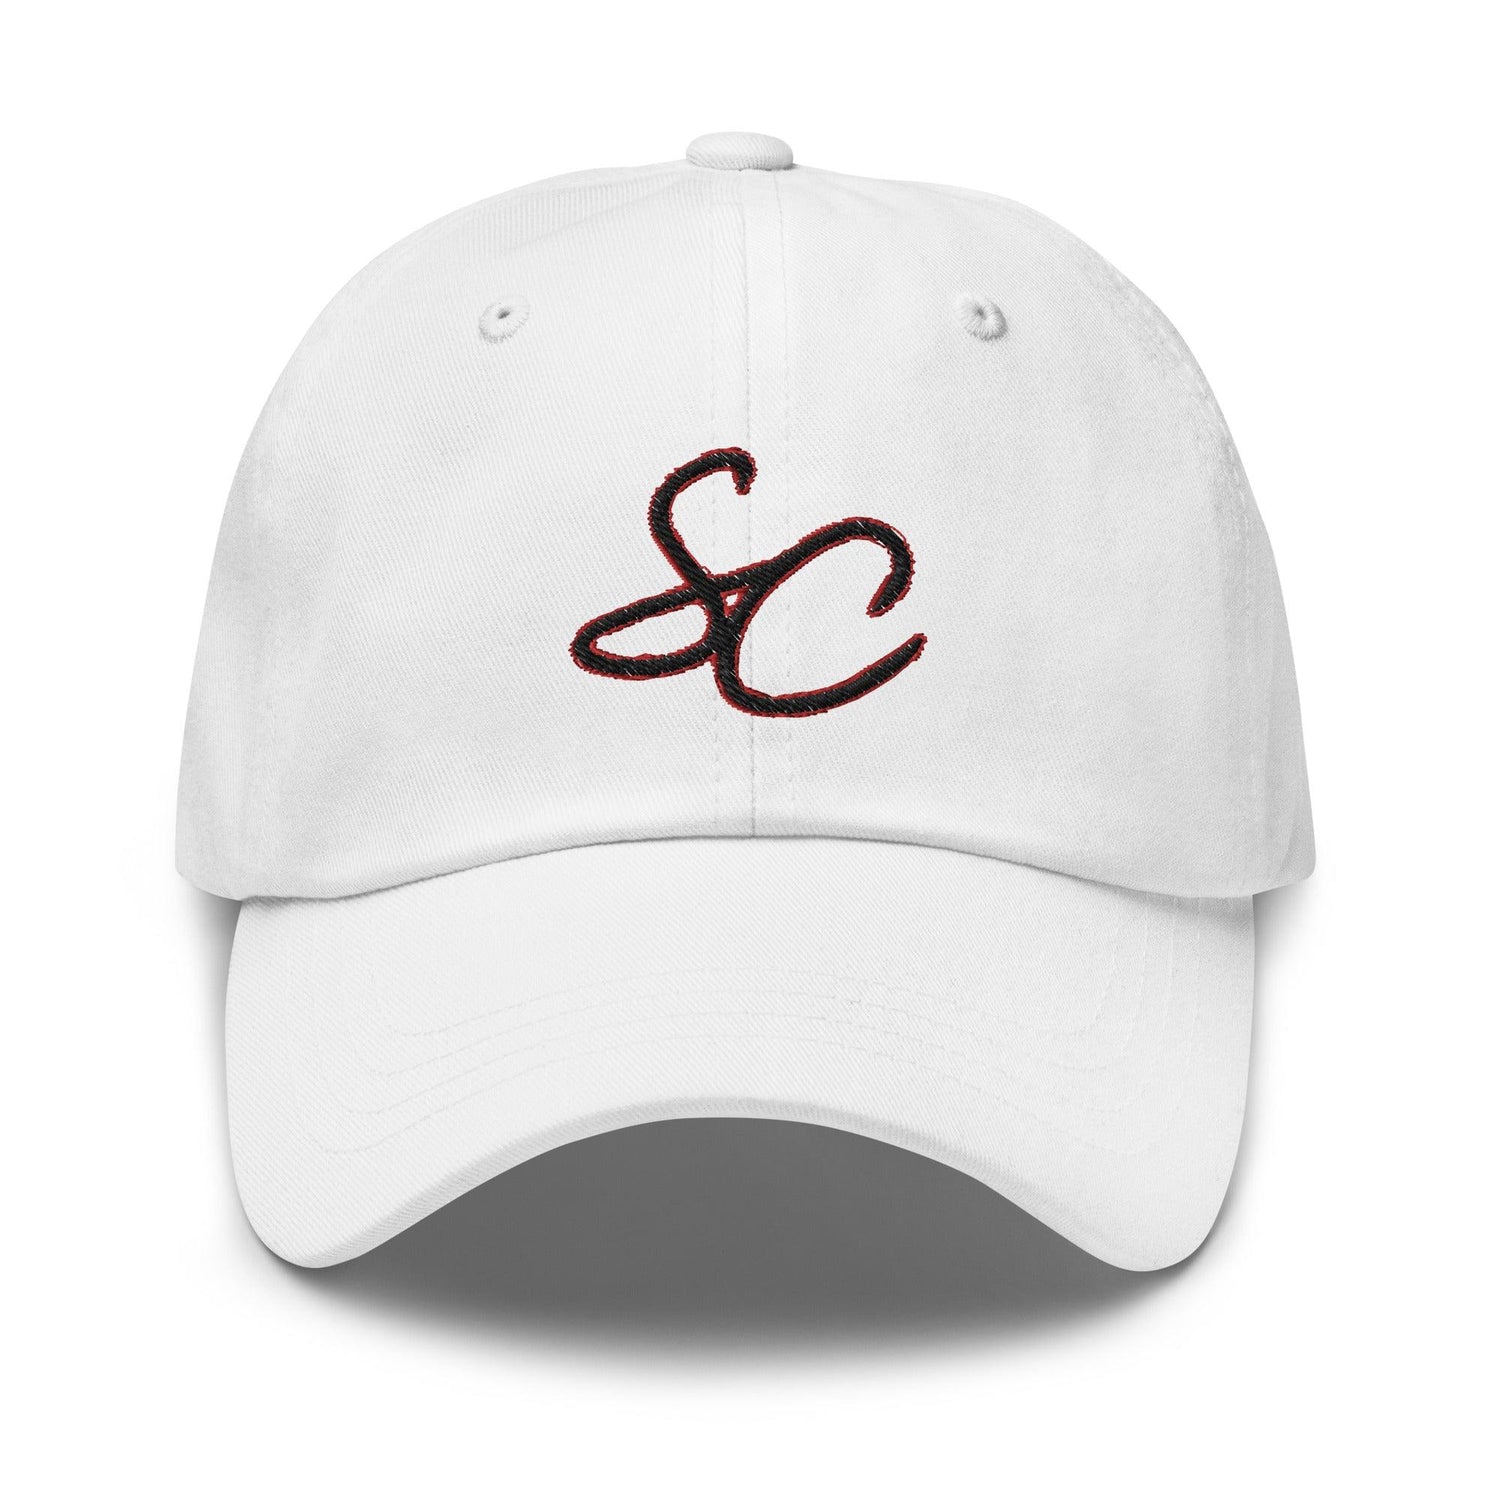 Simmie Cobbs "Essential" hat - Fan Arch